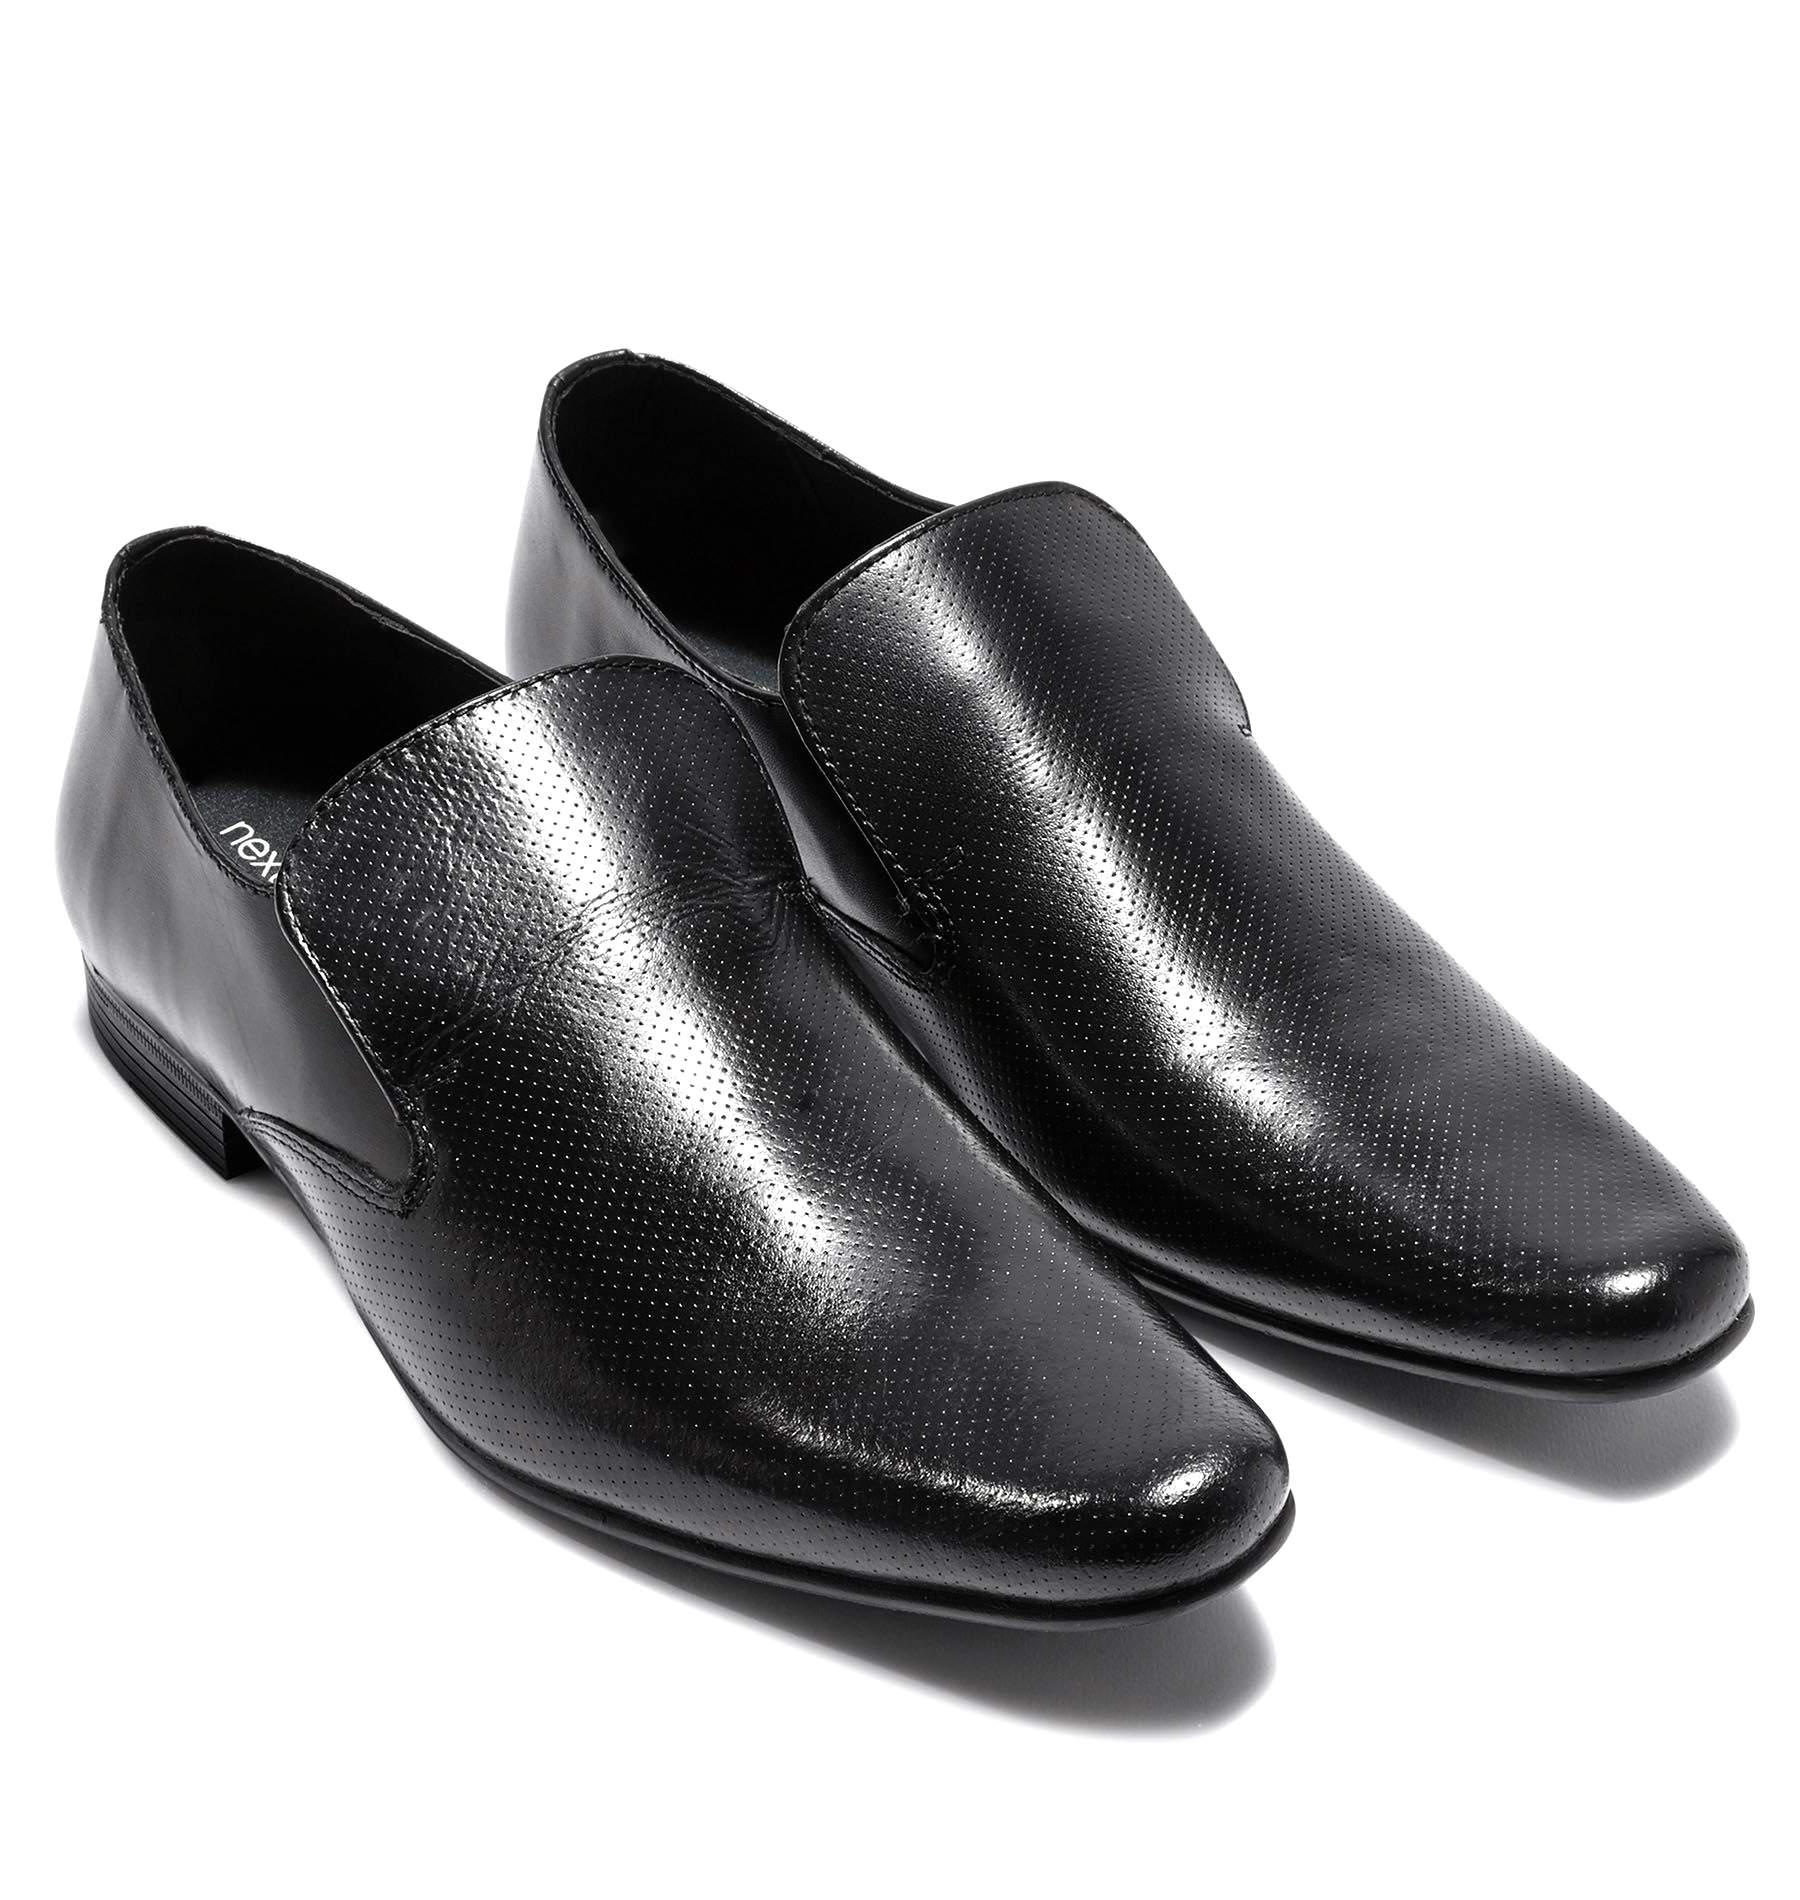 Mens Black Leather Perforated Slip-On Work Shoes UK 8 EU 42 | eBay